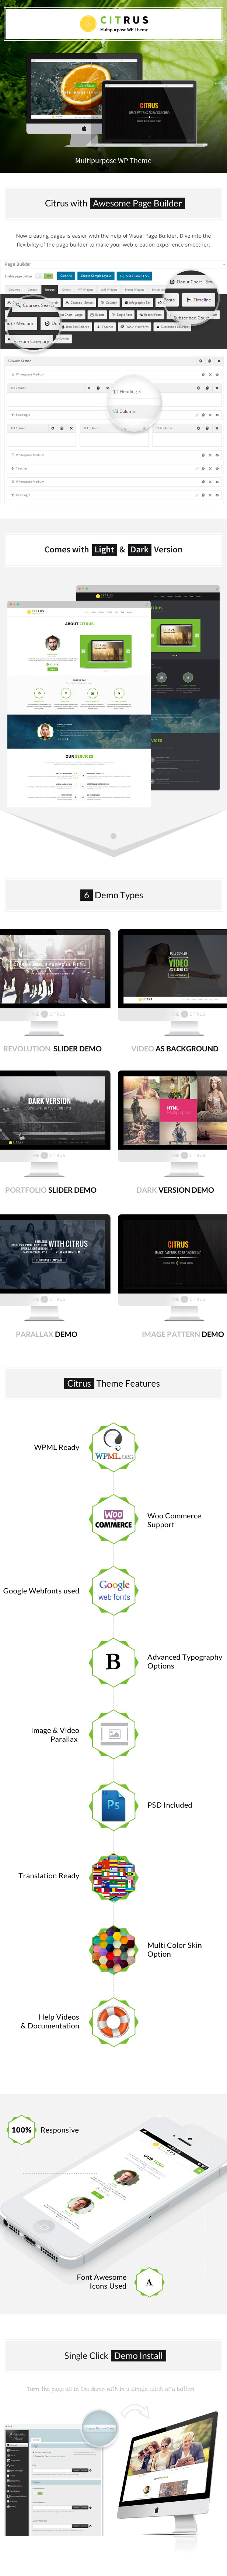 WordPress theme Citrus - Creative One Page Multi-Purpose Theme (Creative)